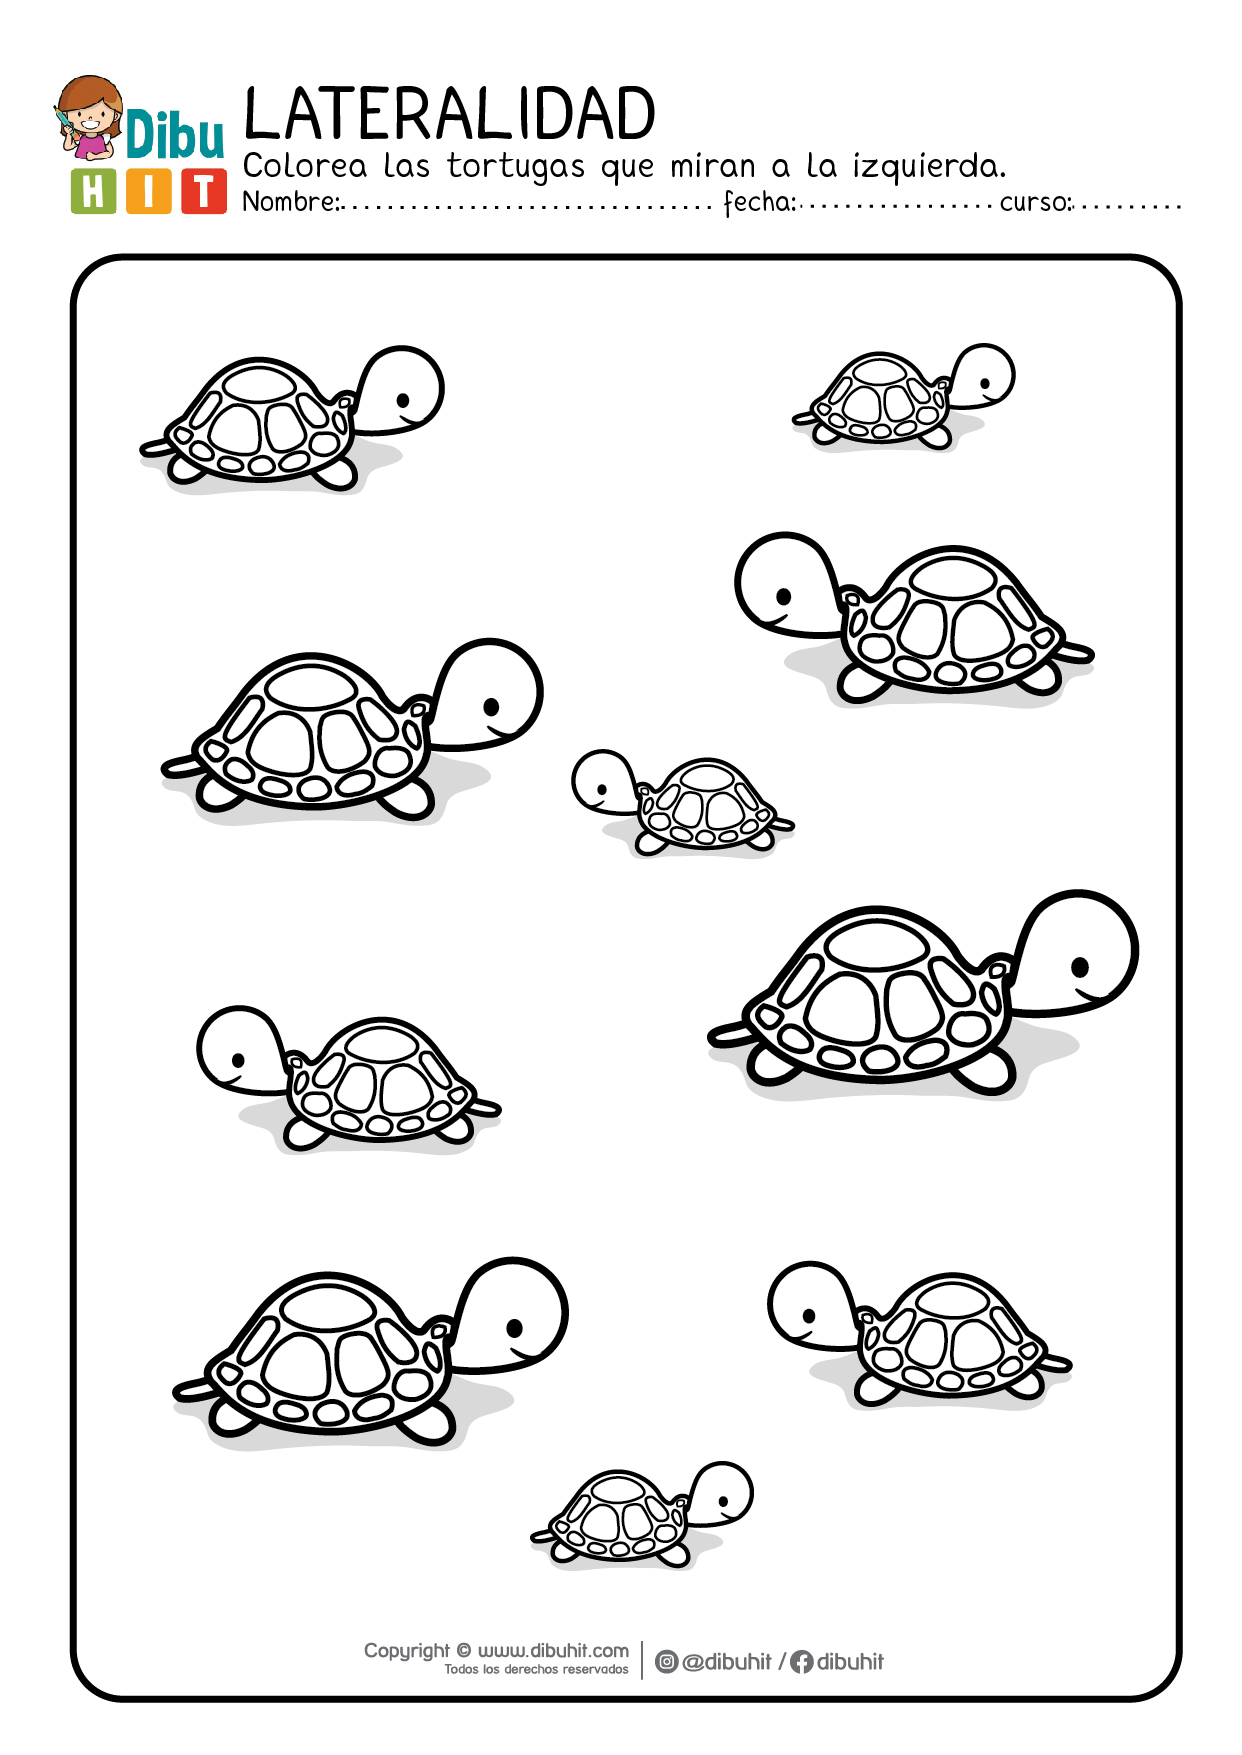 Lateralidad actividad ficha tortugas tartarugas